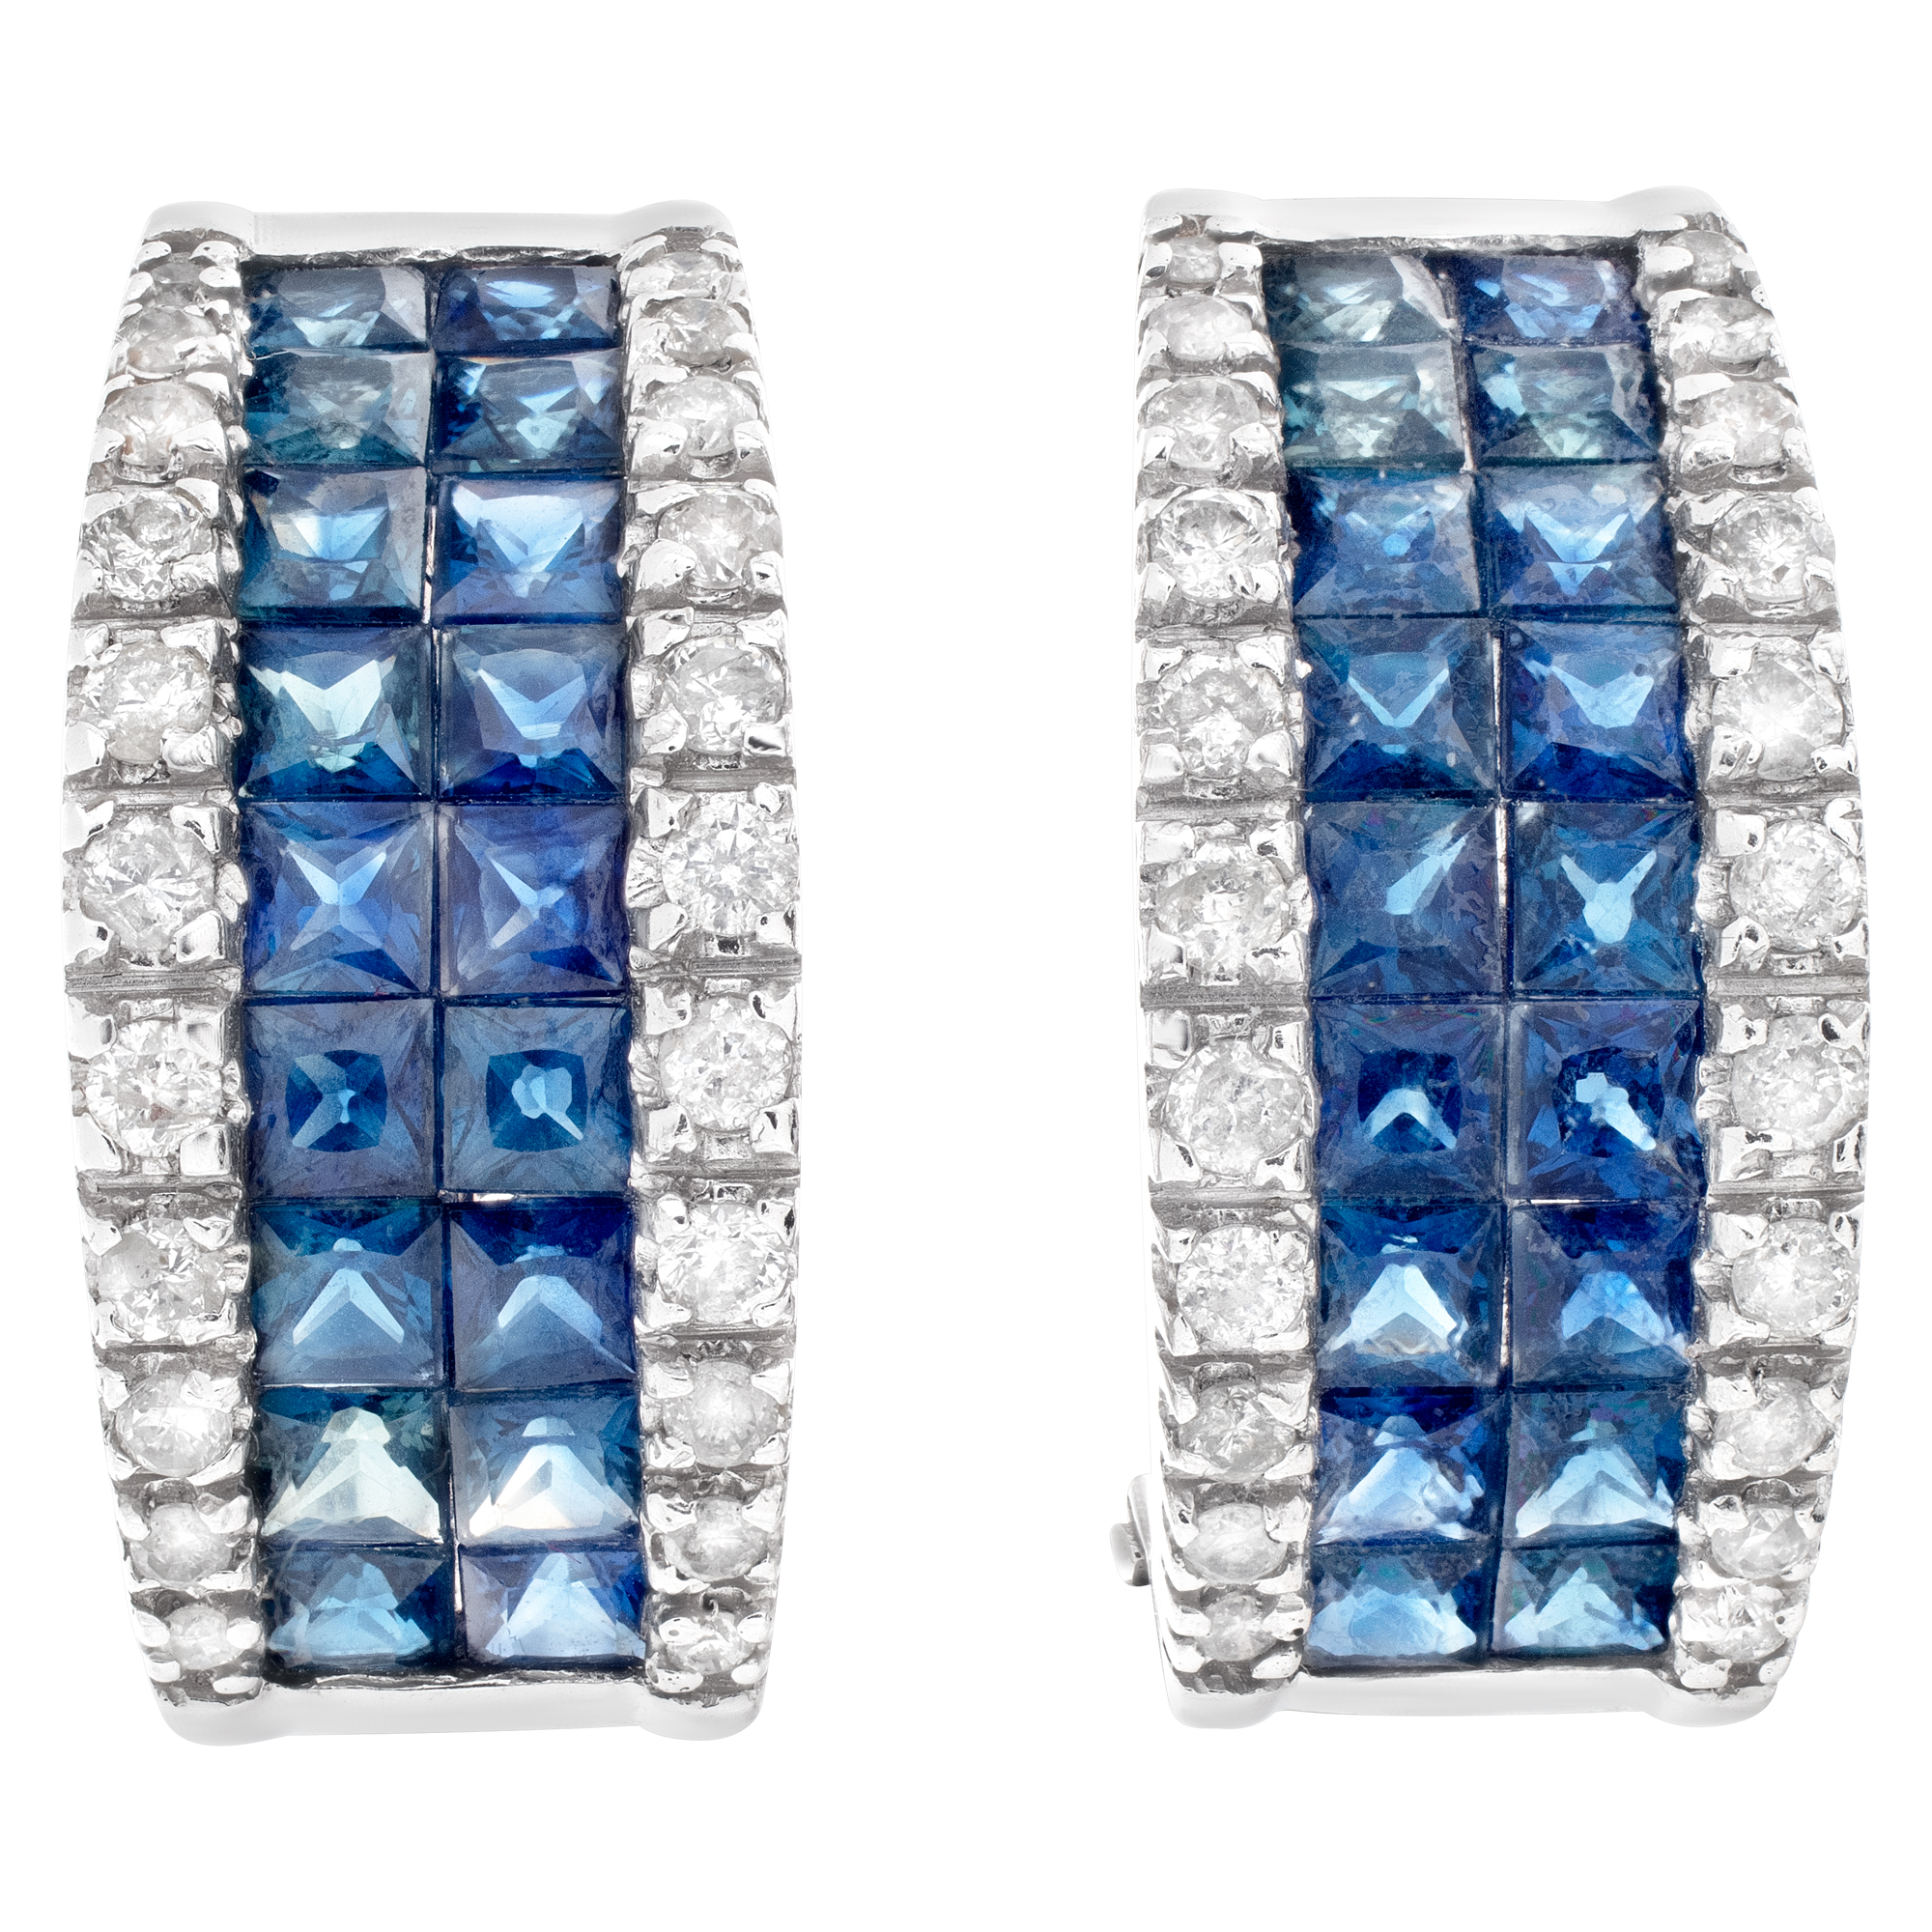 Sapphire and diamond hoops earrings set in 14k white gold